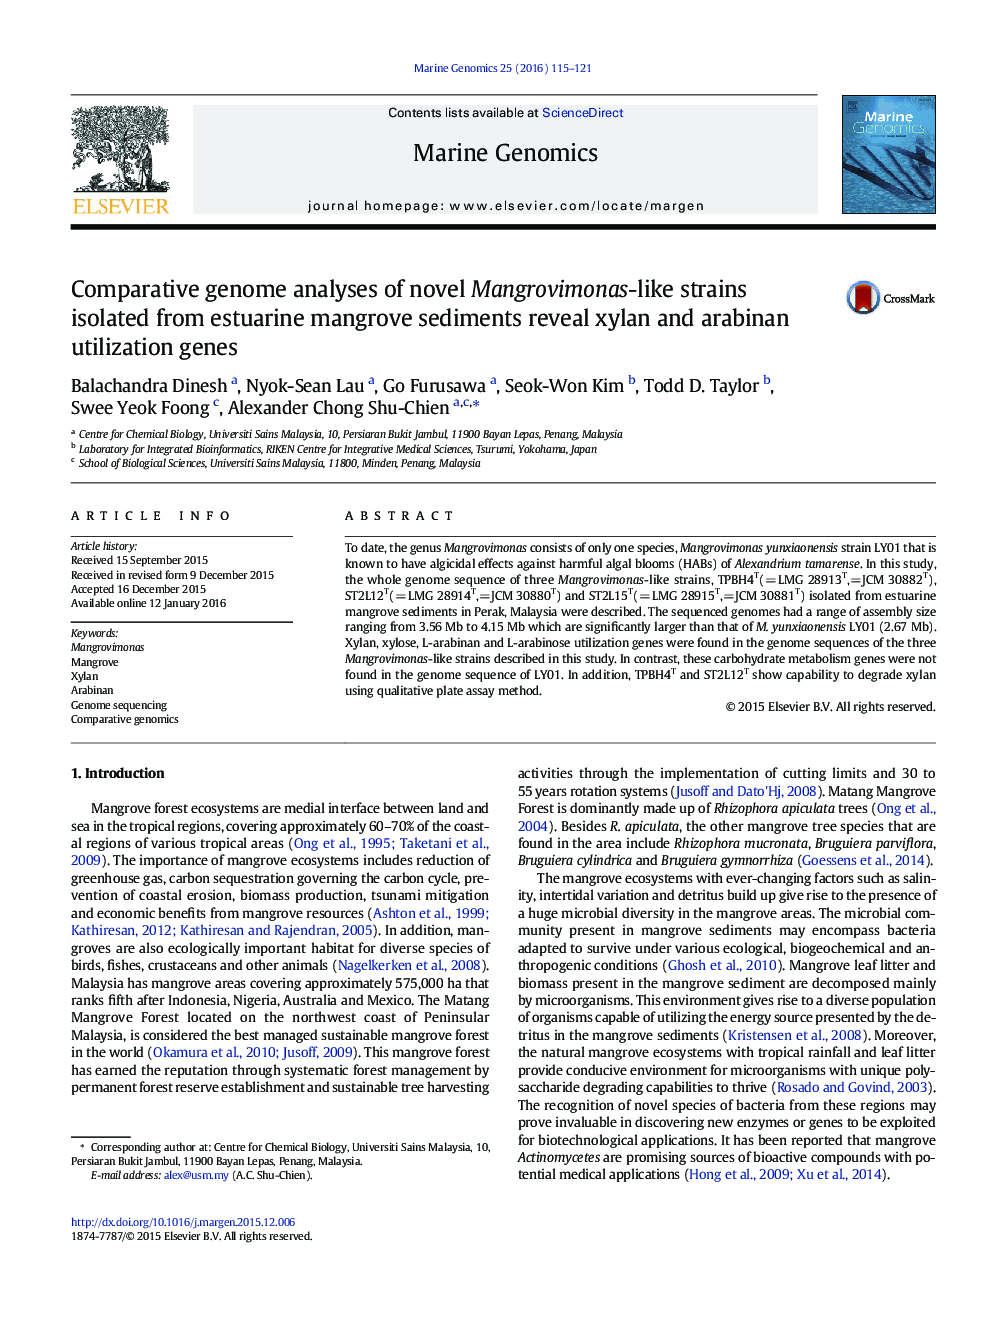 Comparative genome analyses of novel Mangrovimonas-like strains isolated from estuarine mangrove sediments reveal xylan and arabinan utilization genes